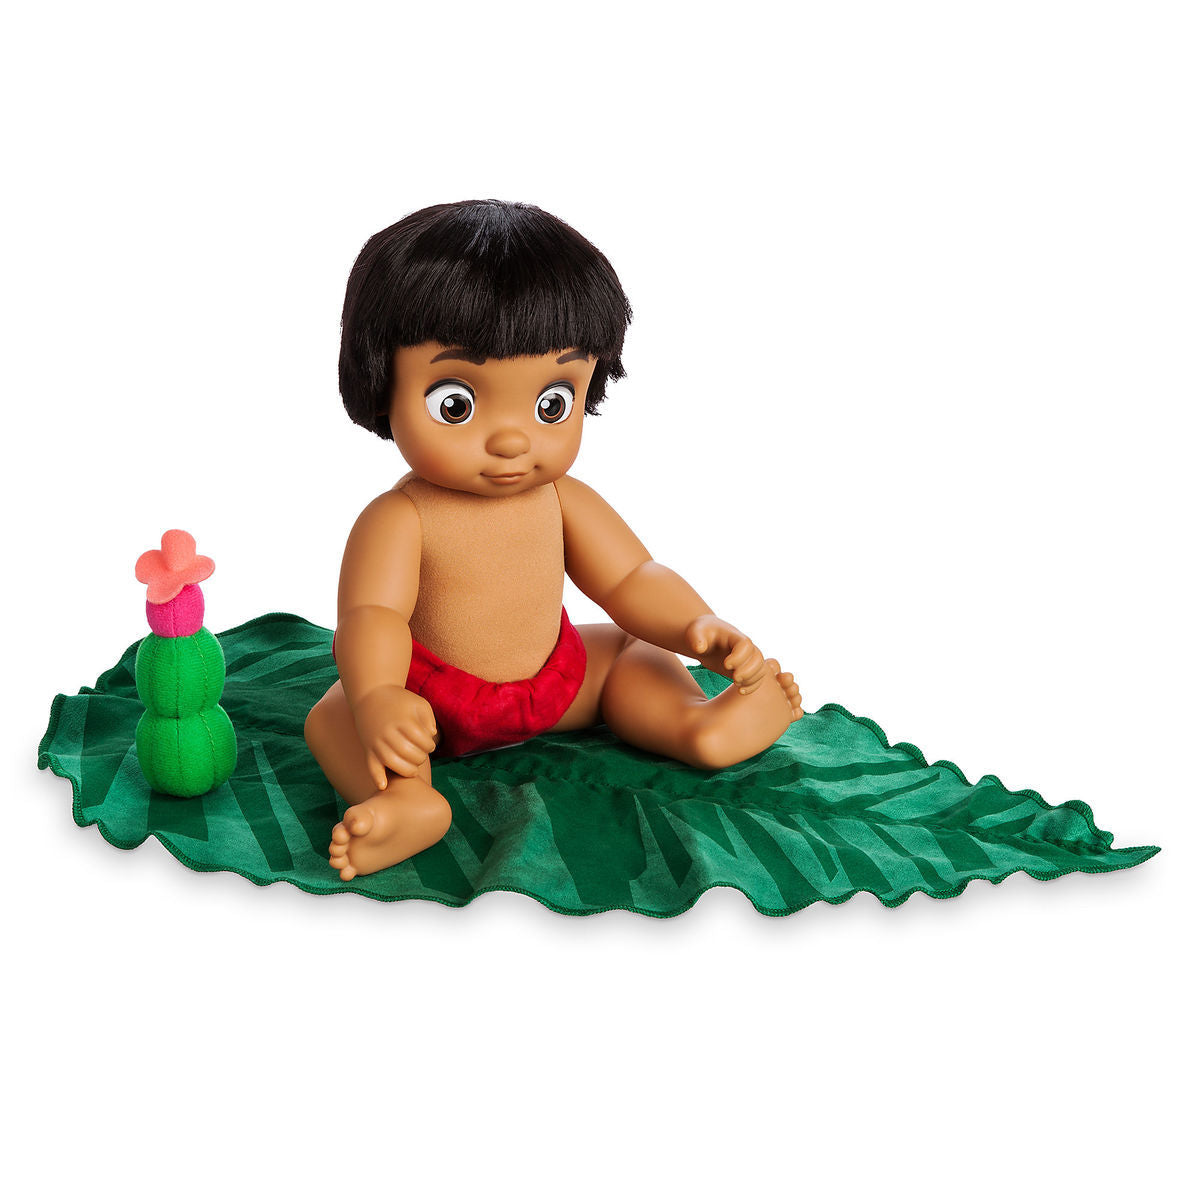 Disney Animators' Collection Mowgli Doll Origins Series New with Box